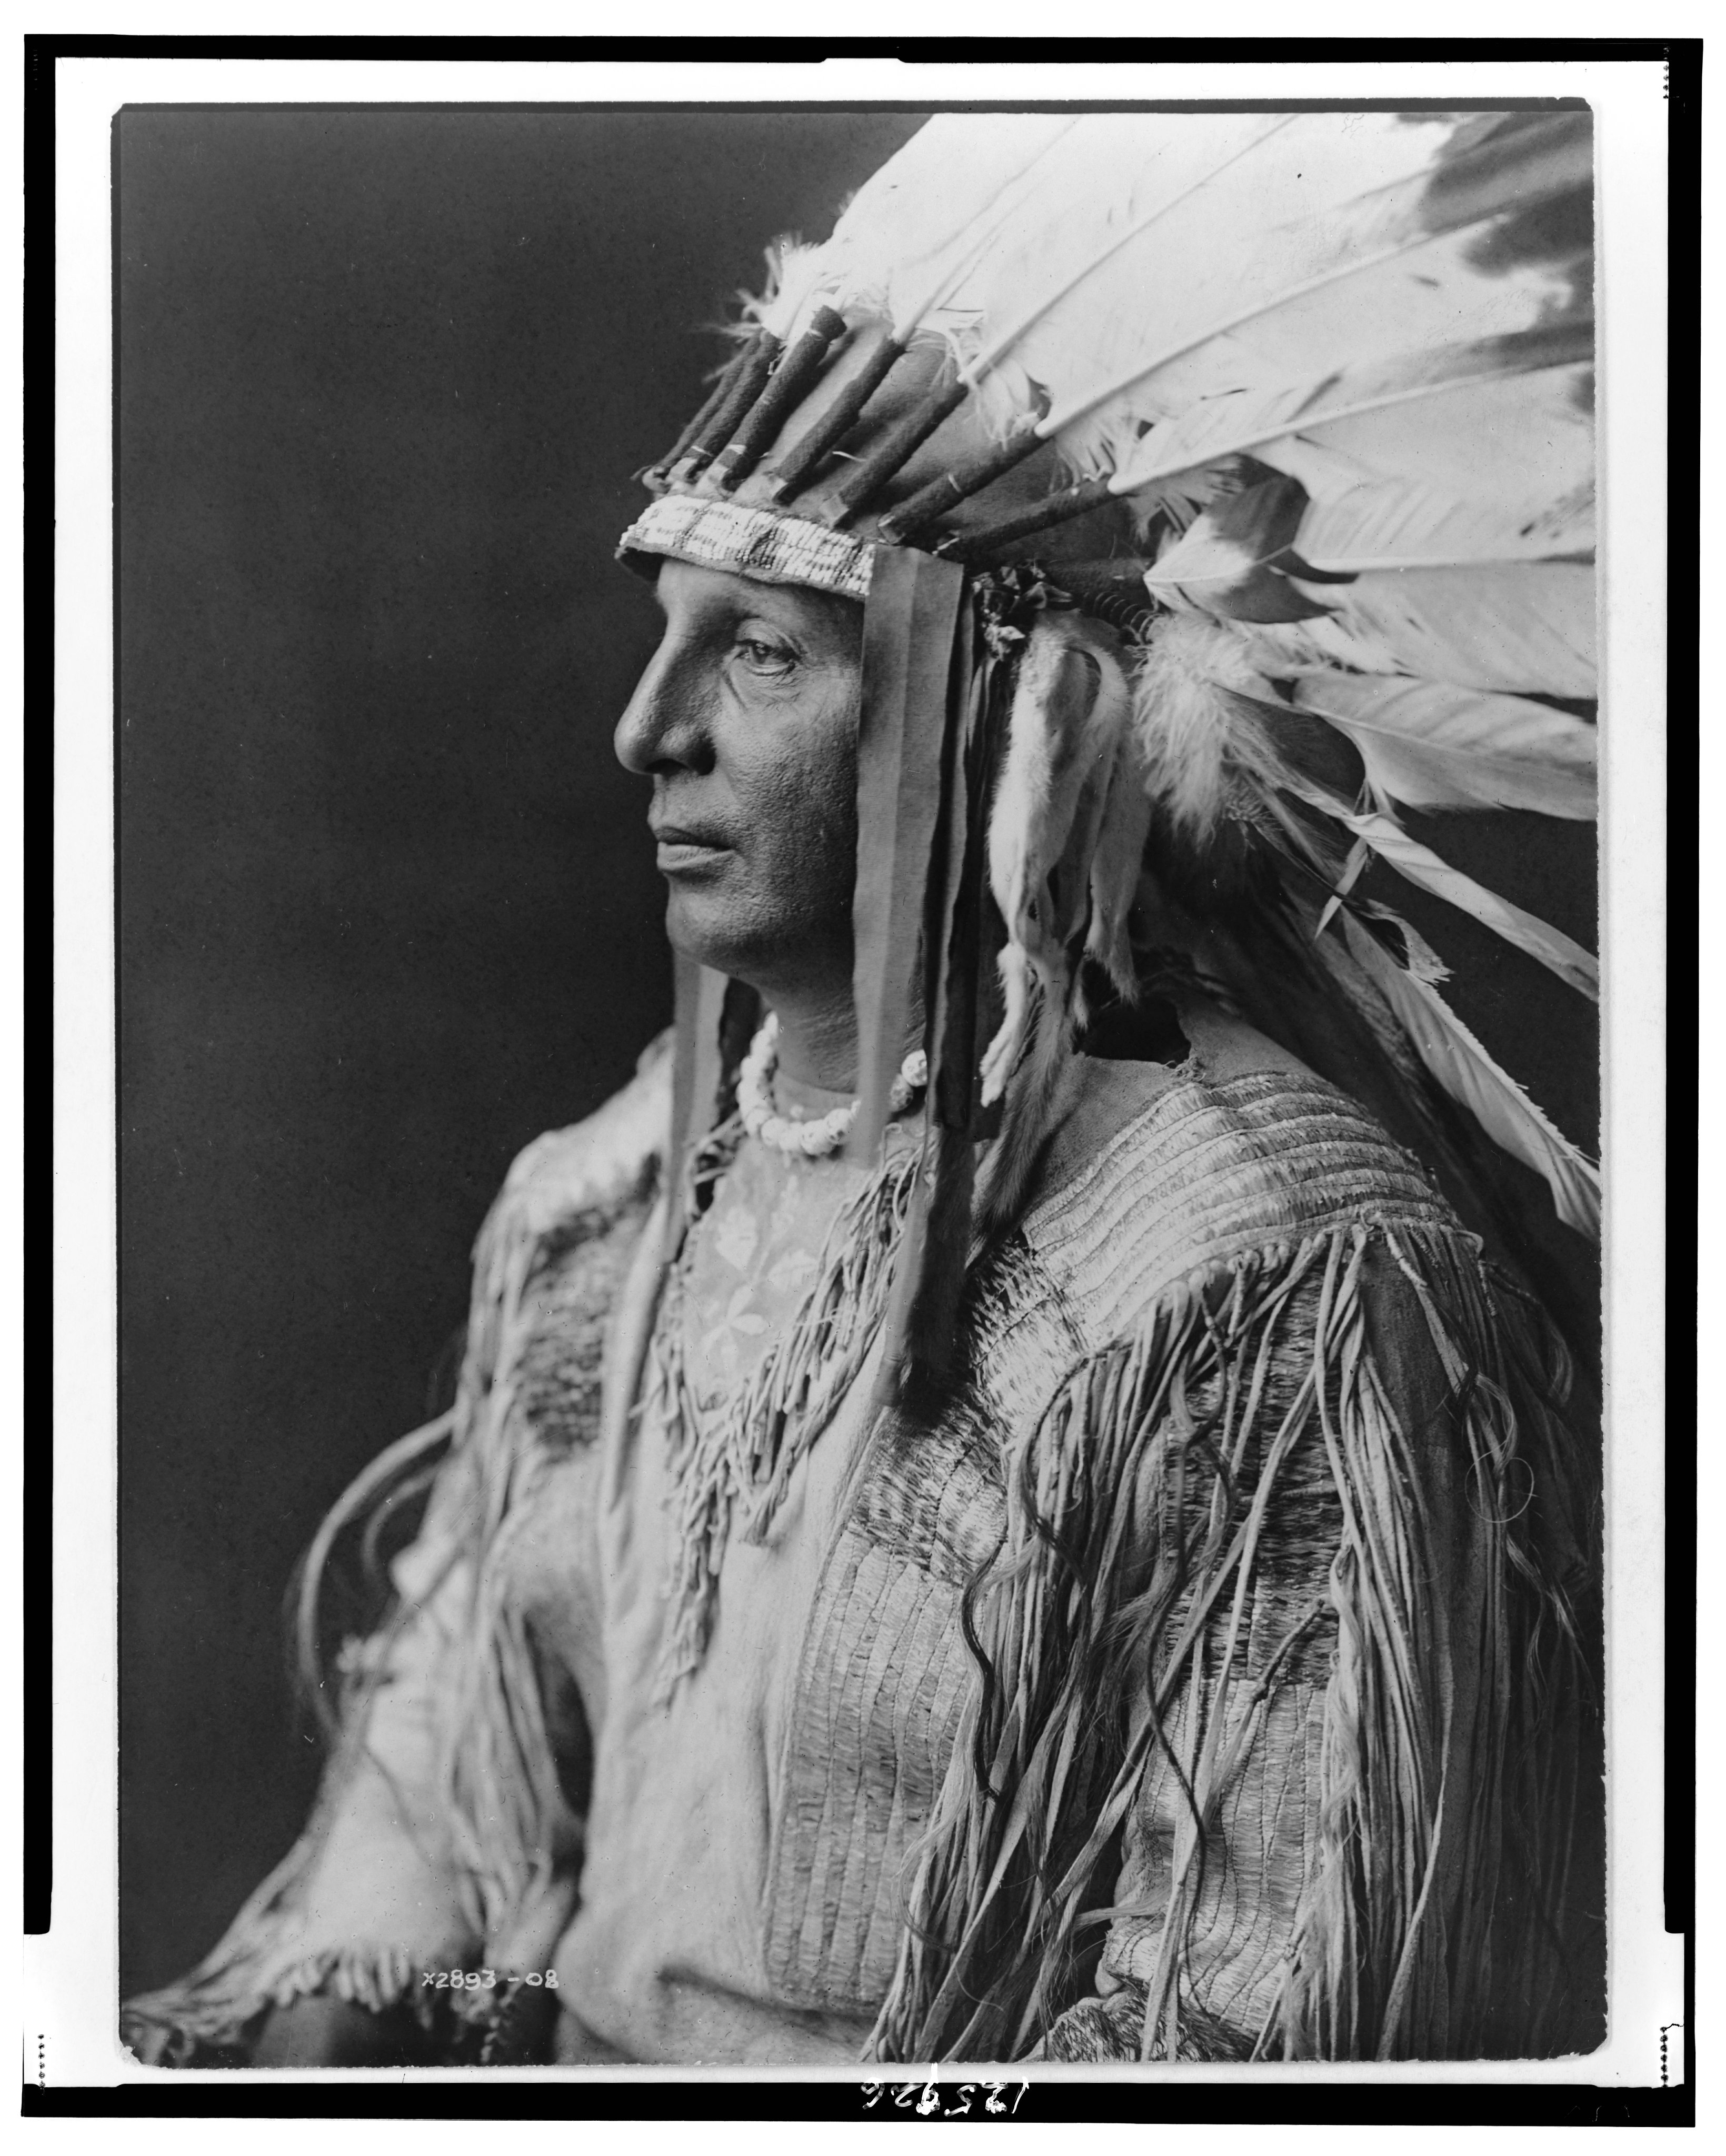 White tribe. Индейцы Северной Америки Сиу. Могикане индейцы Северной Америки. Индейцы Чокто. Апачи индейцы.